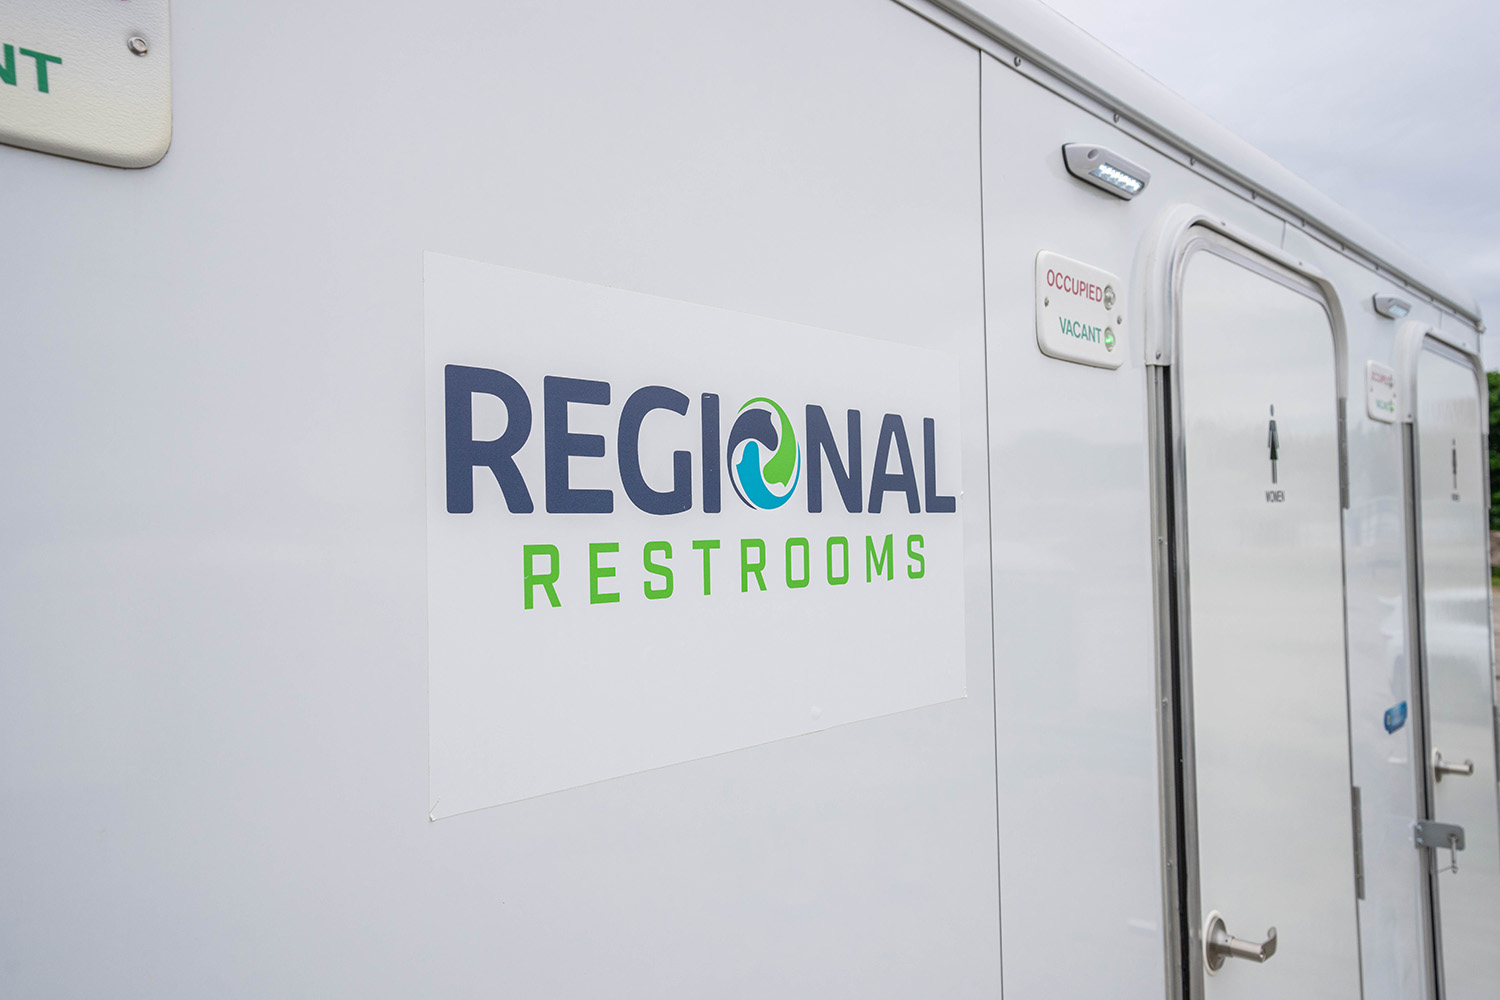 Regional Restrooms logo on trailer